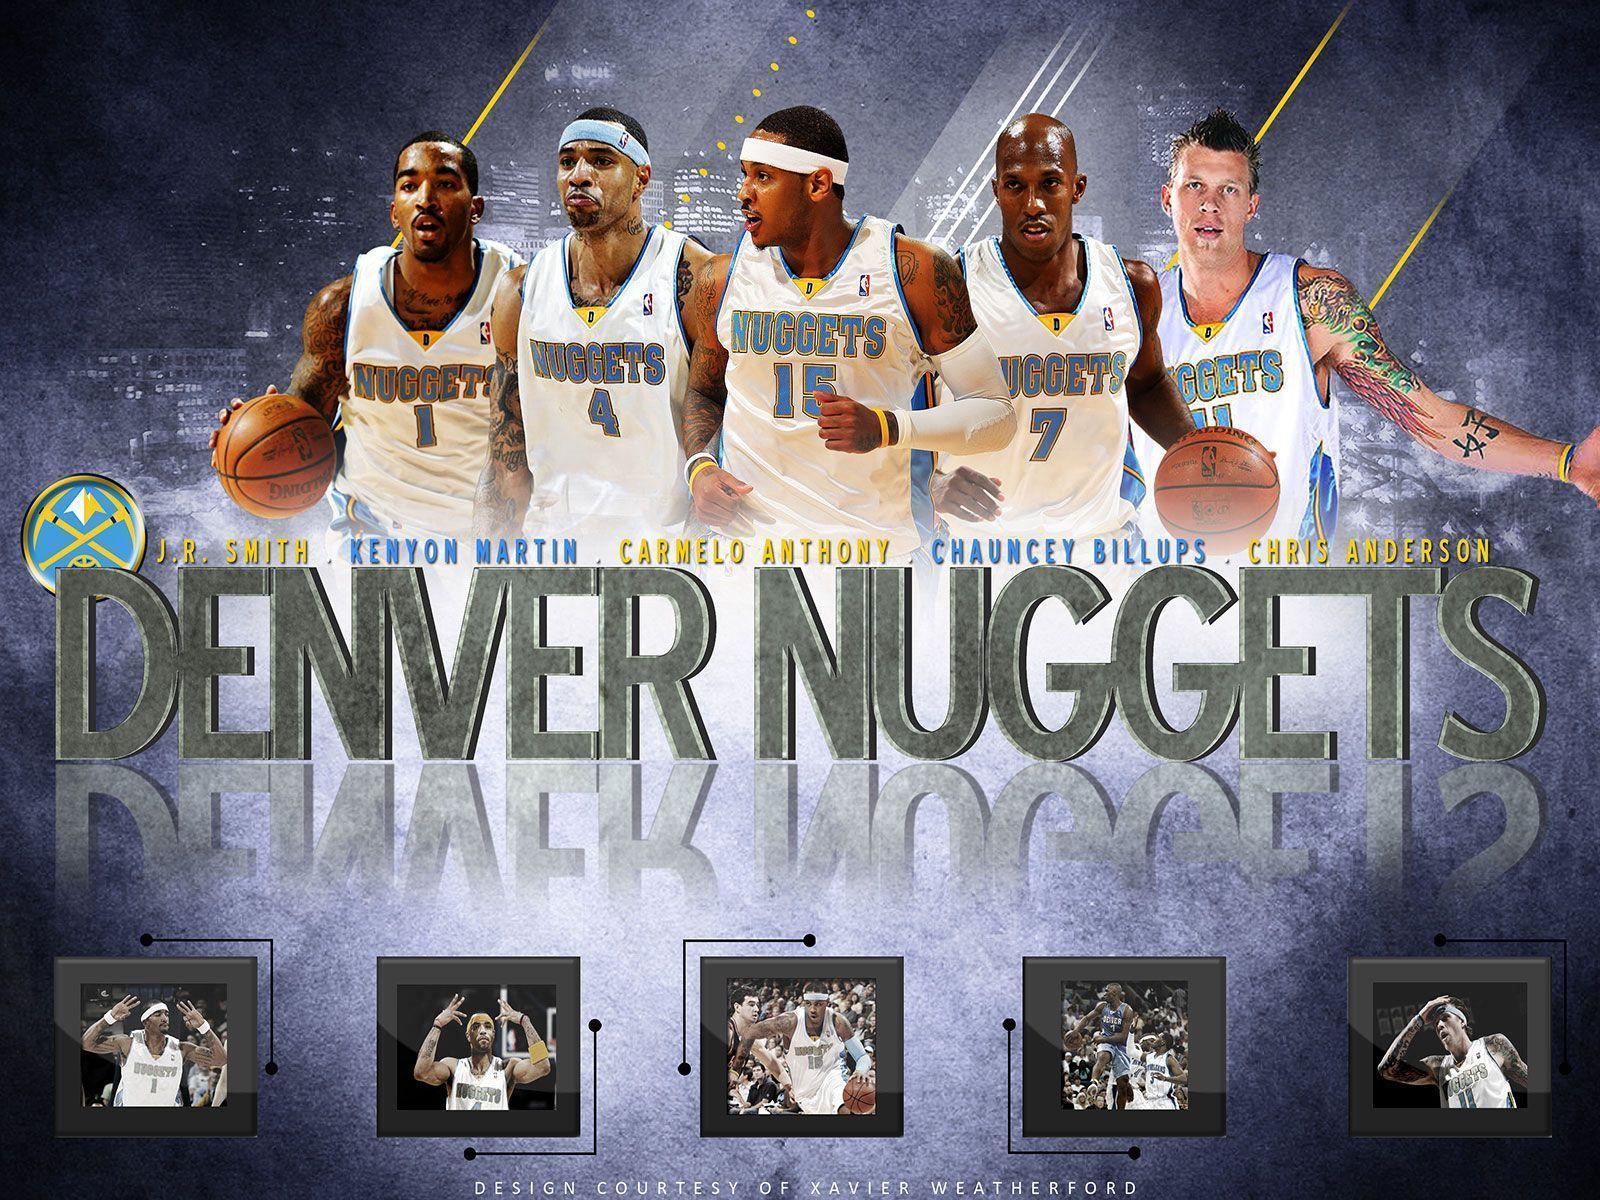 Denver Nuggets 2010 Team Wallpaper. Basketball Wallpaper at